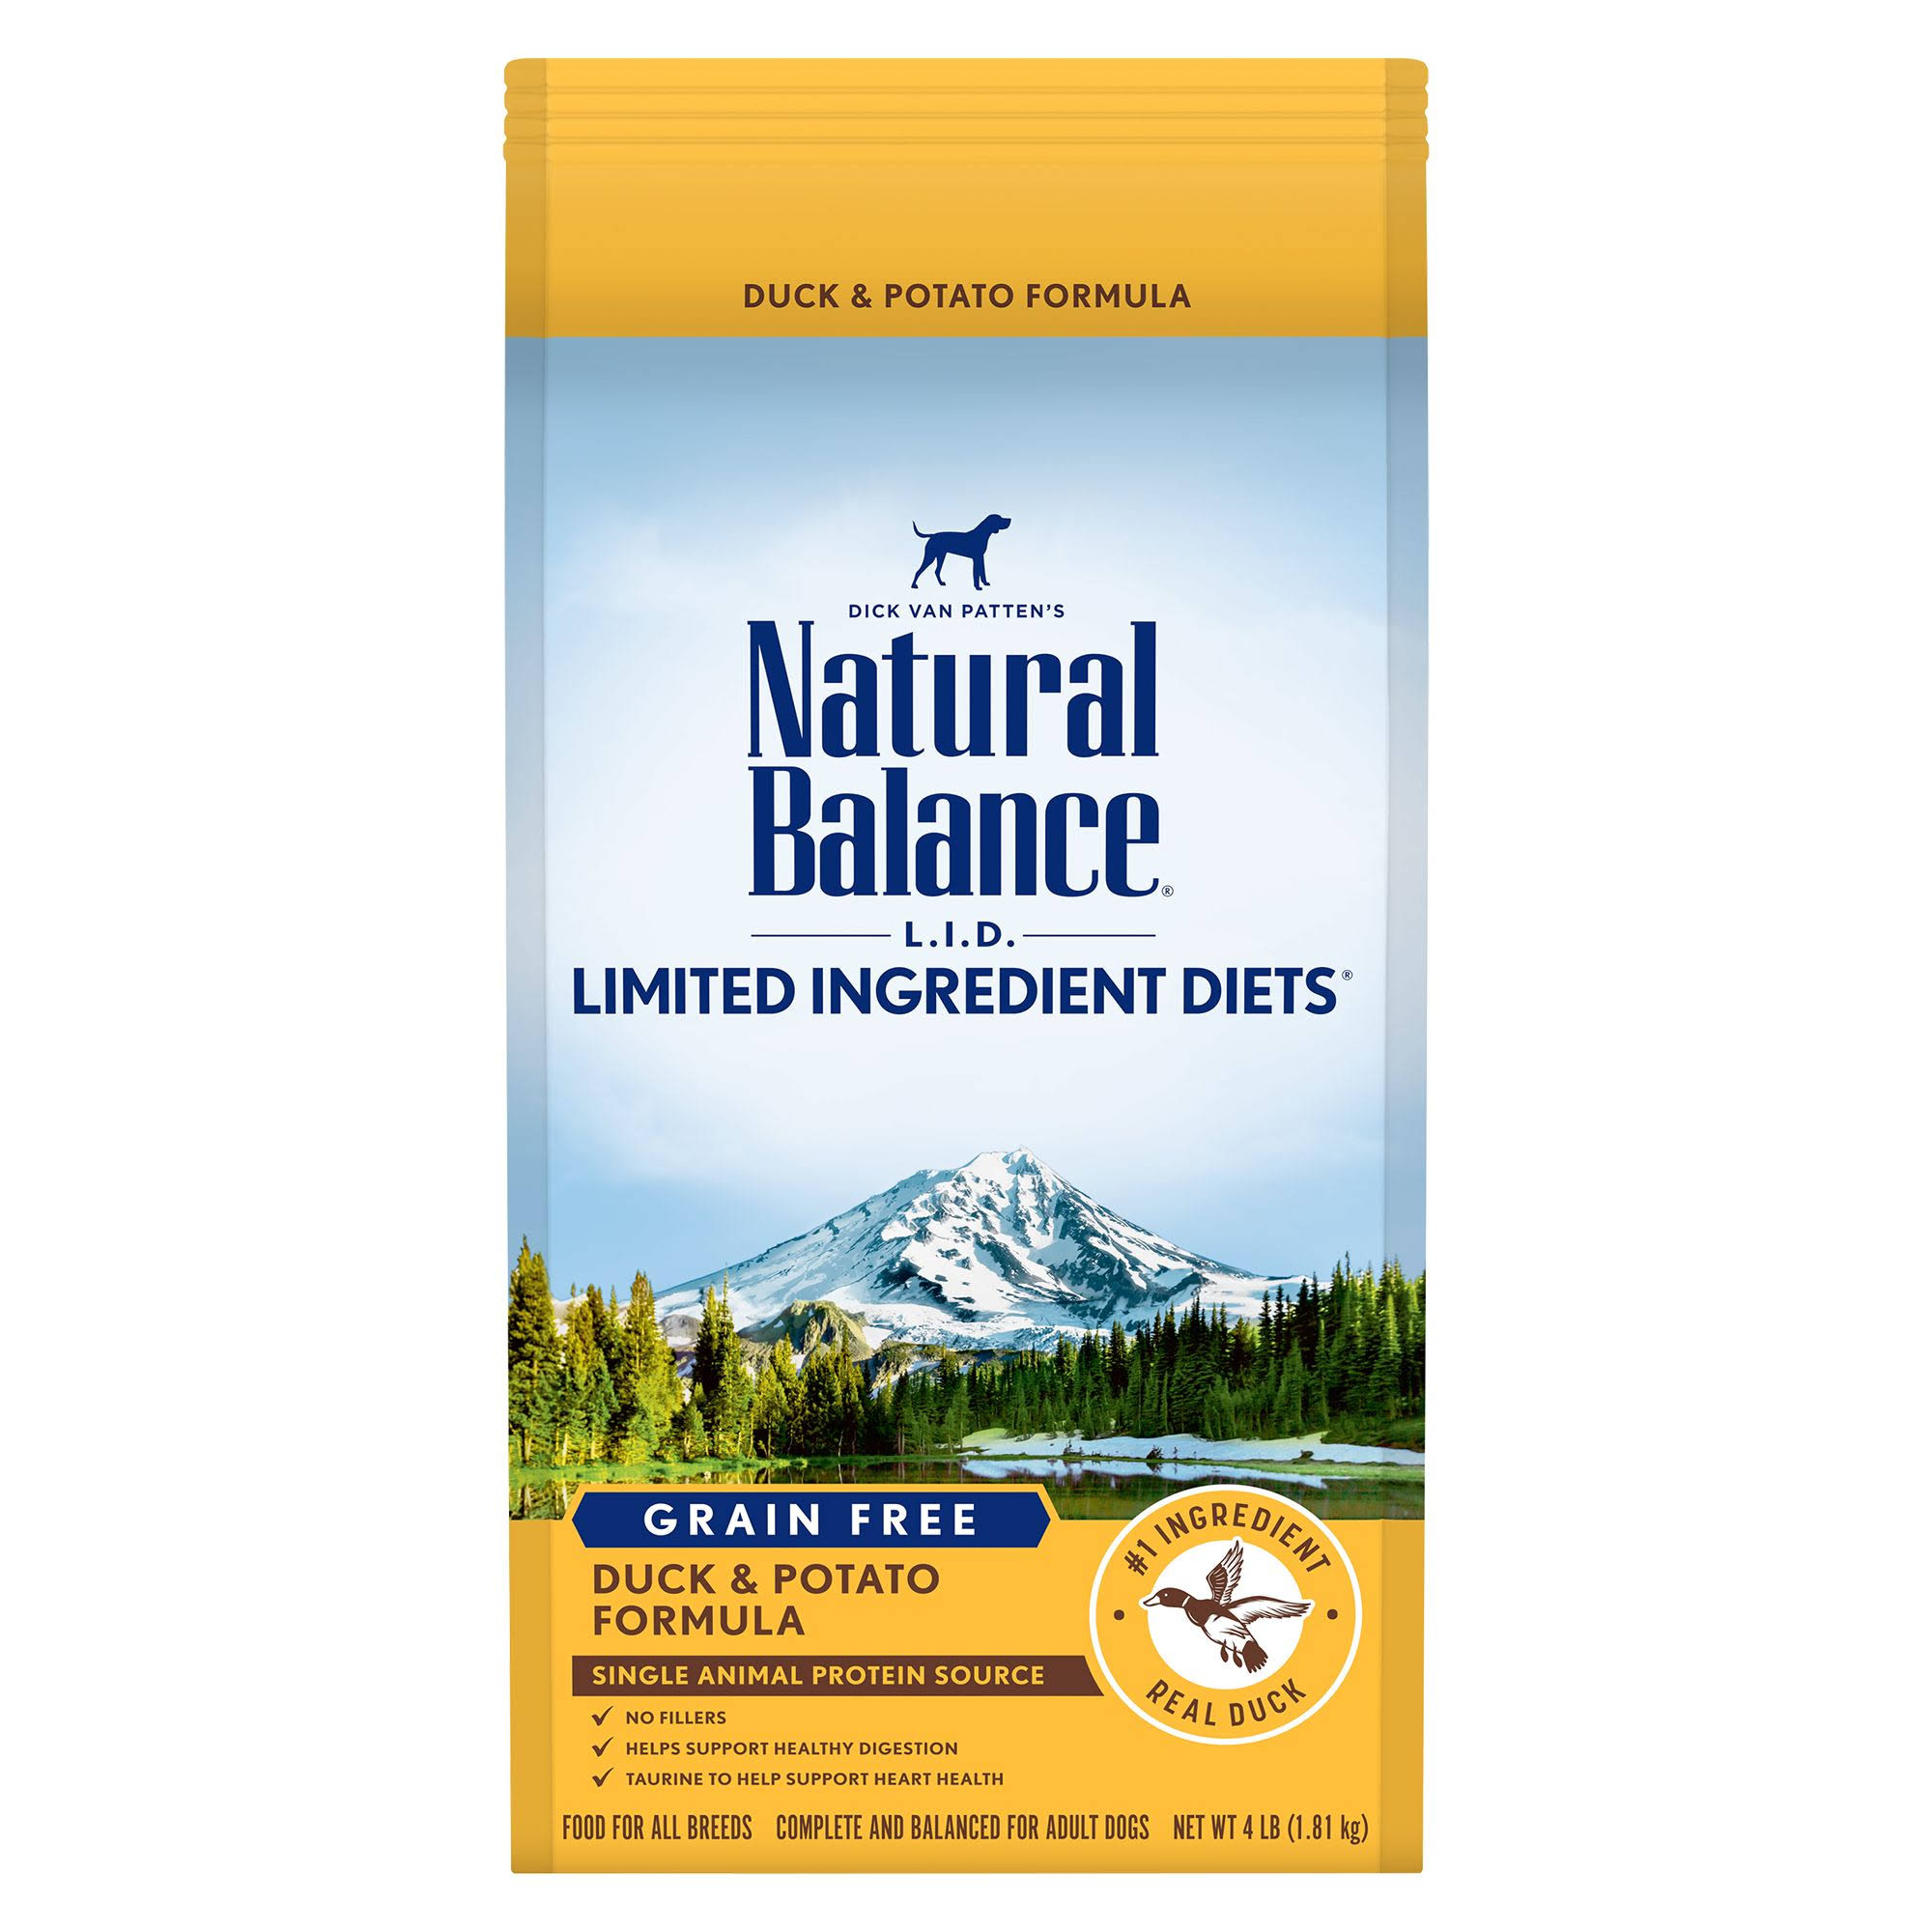 Natural Balance Limited Ingredients Diets Dog Food, Grain Free, Duck & Potato Formula - 4 lb